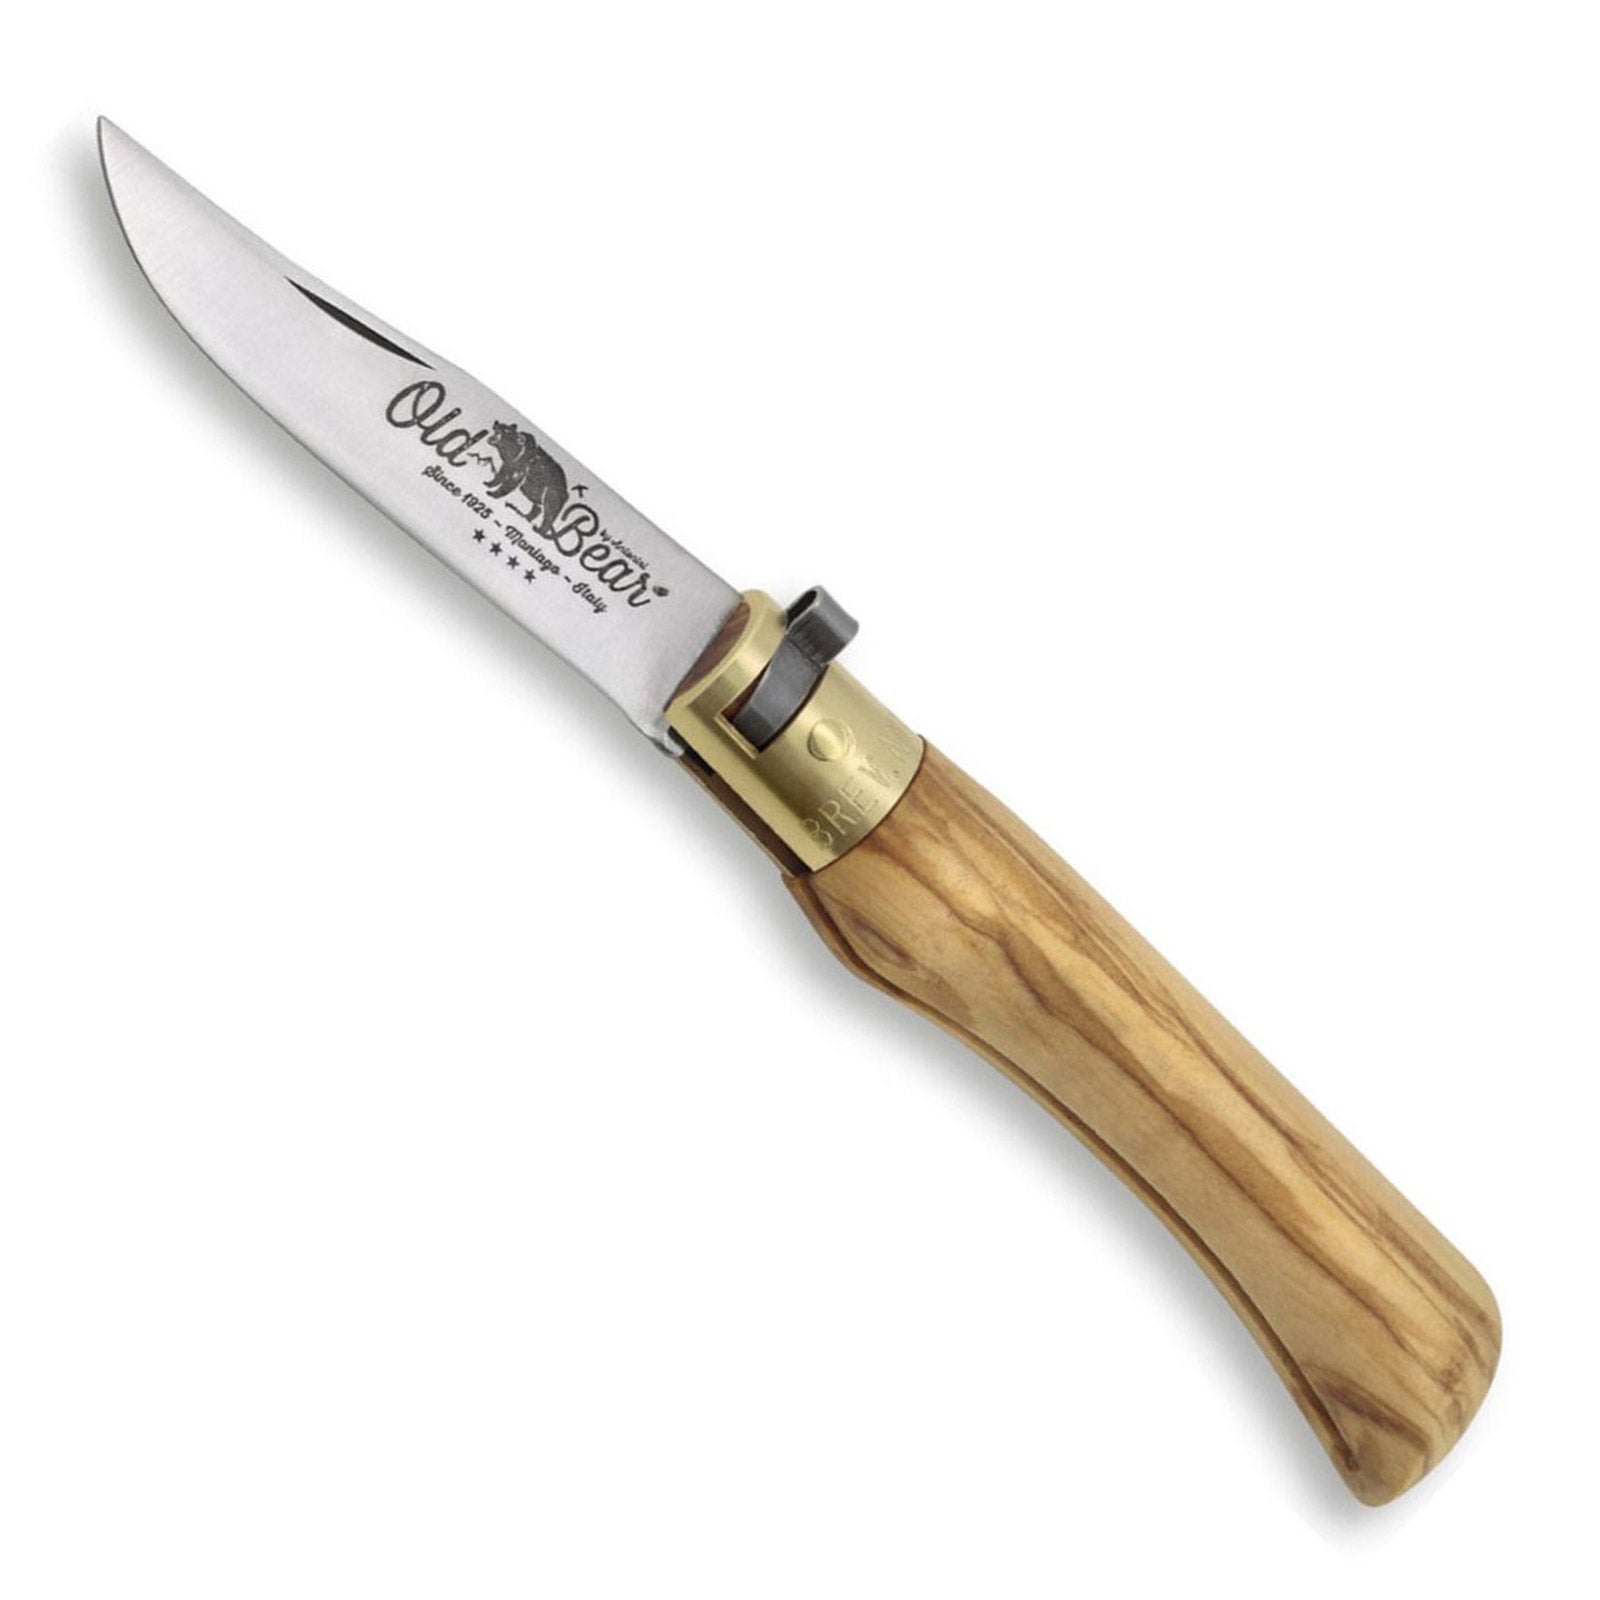 Antonini Old Bear S Lever Lock Folding Knife - Olive Wood - Stainless